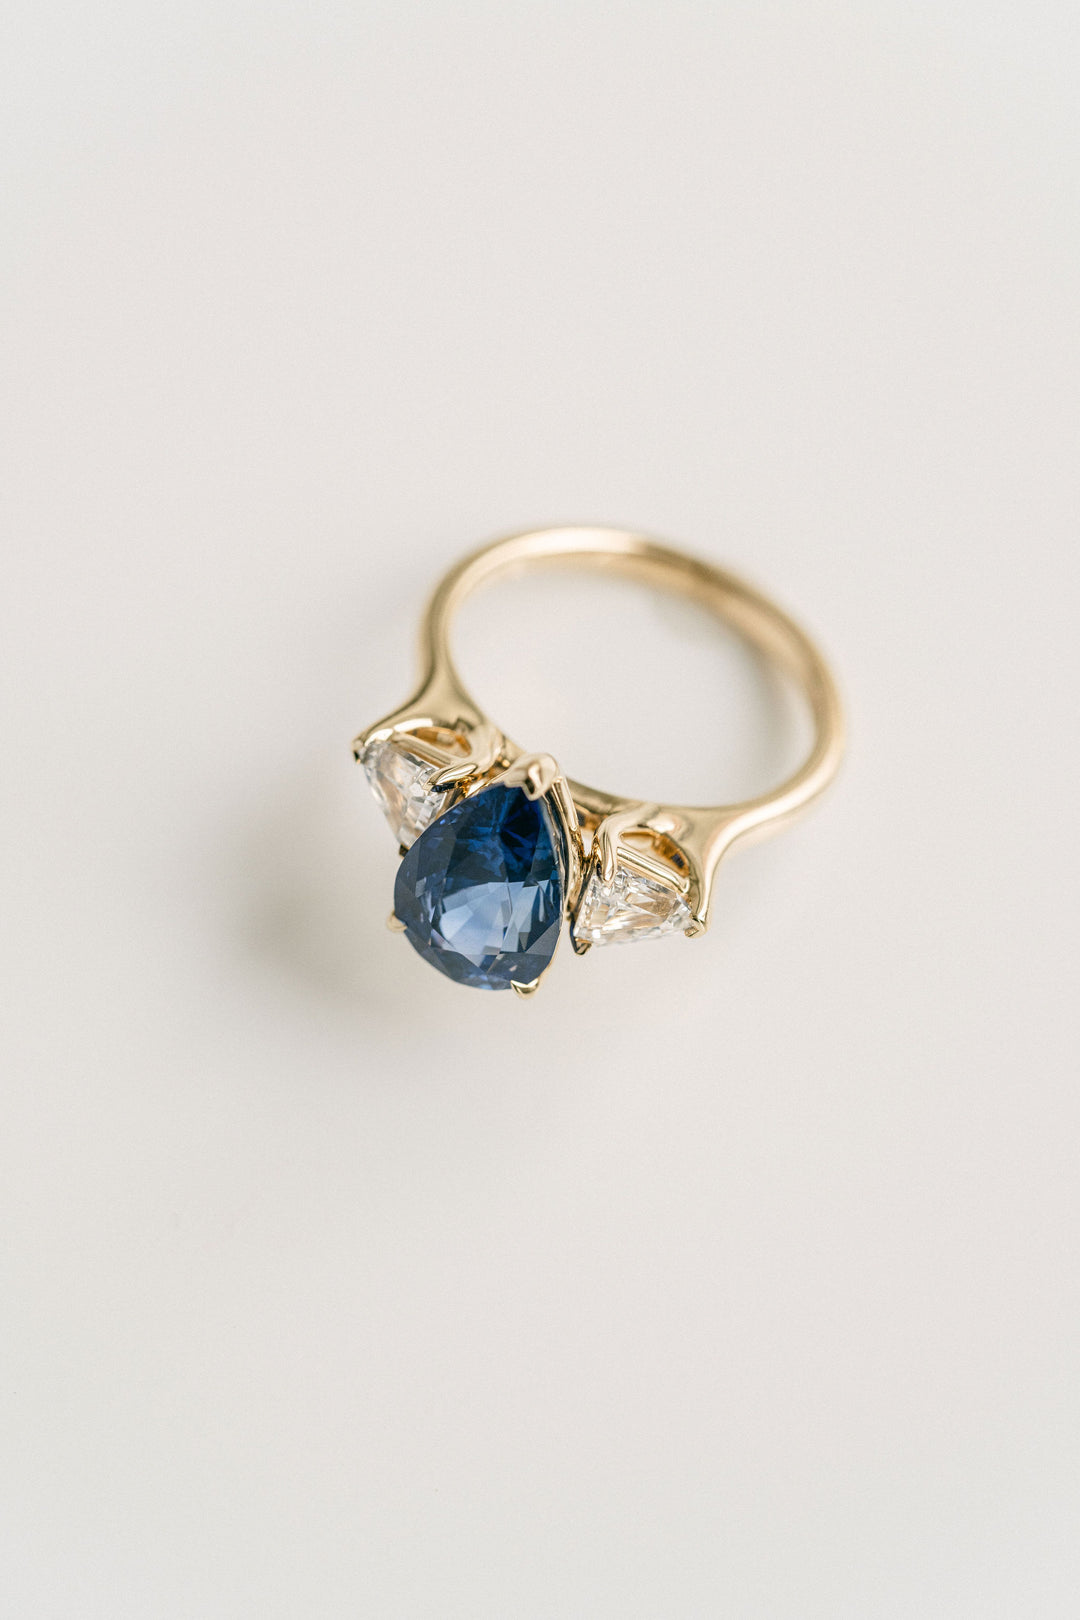 Pear Shape Blue Sri Lankan Sapphire With Shield Shape Diamond Accents, 14k Yellow Gold